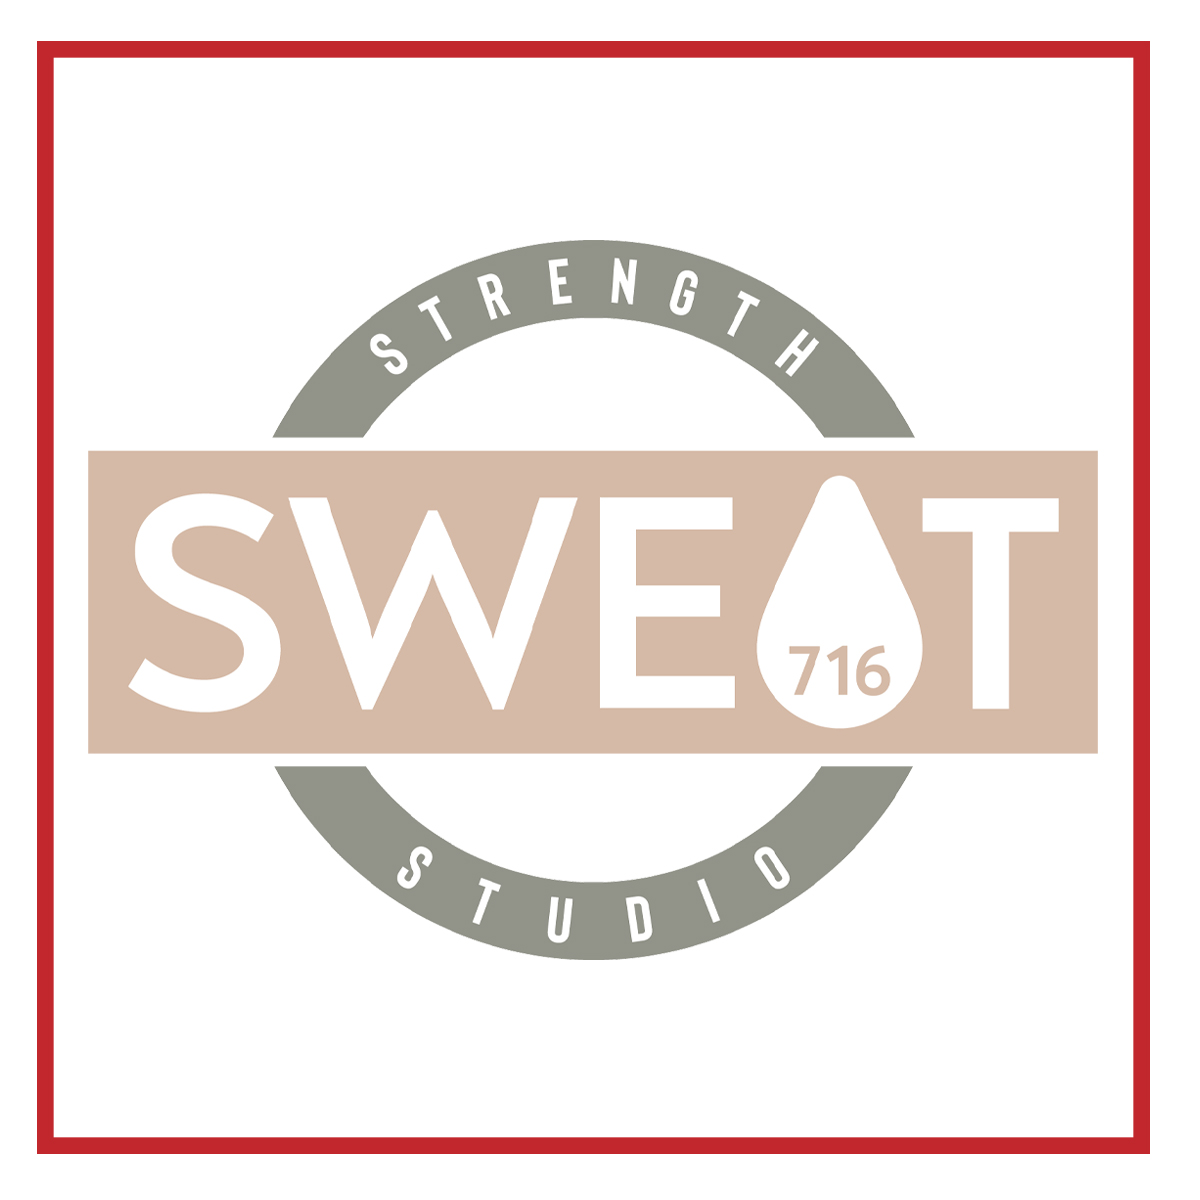 Sweat 716